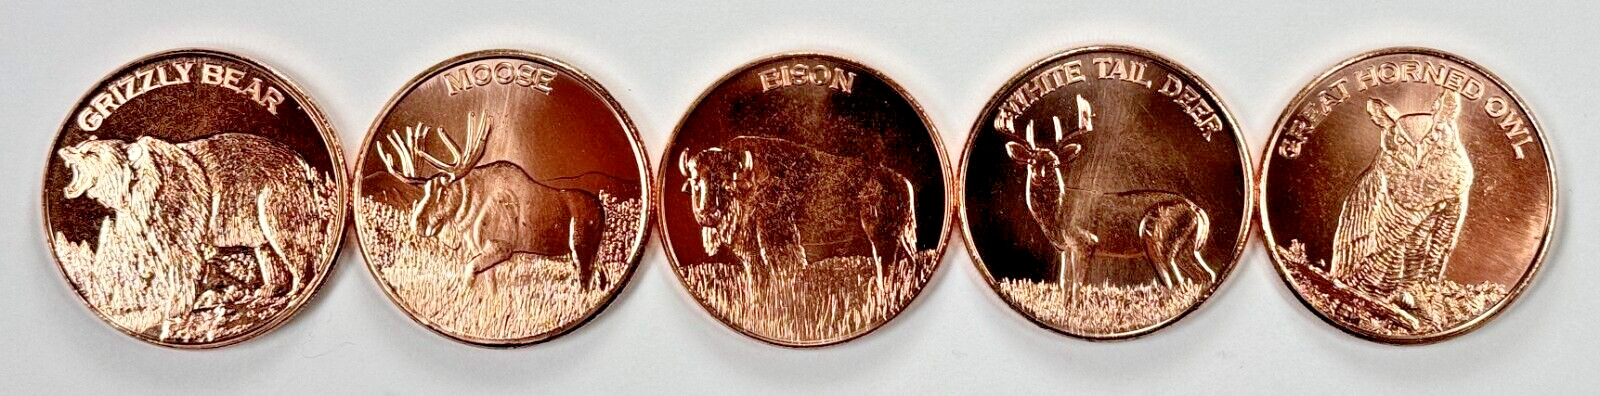 Copper Coins * One Oz. Each * .999 Bullion * 5 pc. North American Wildlife Set